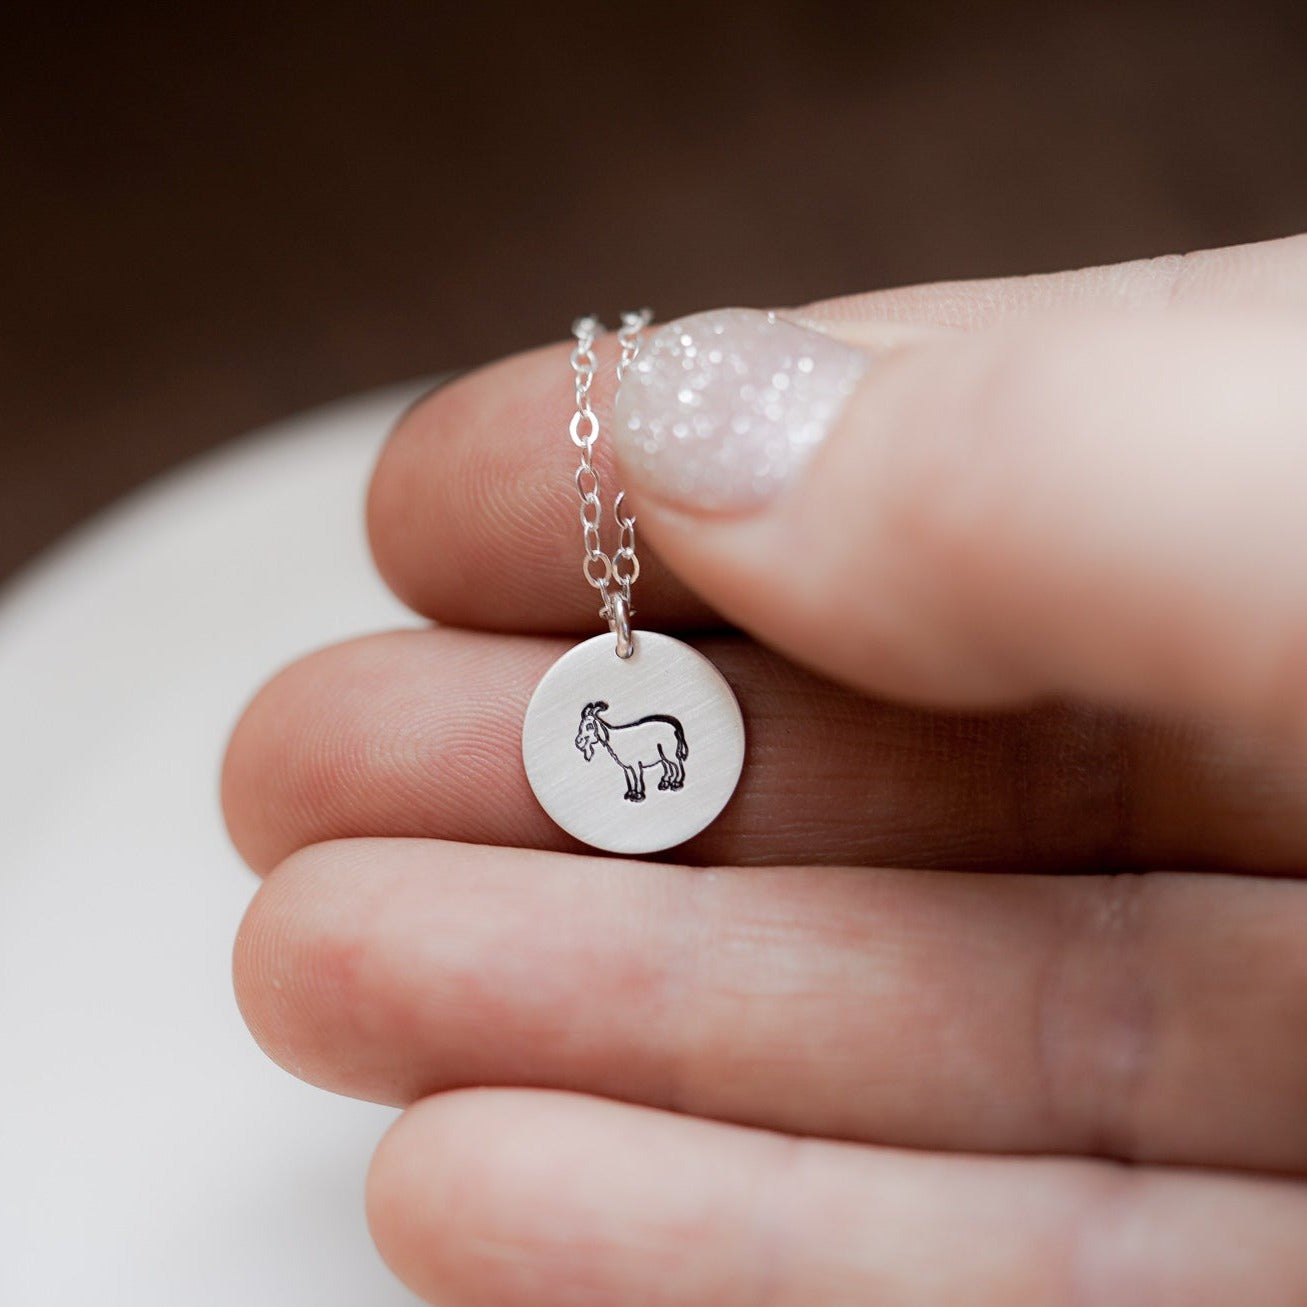 14k Gold Tiny Heart Necklace — Everli Jewelry